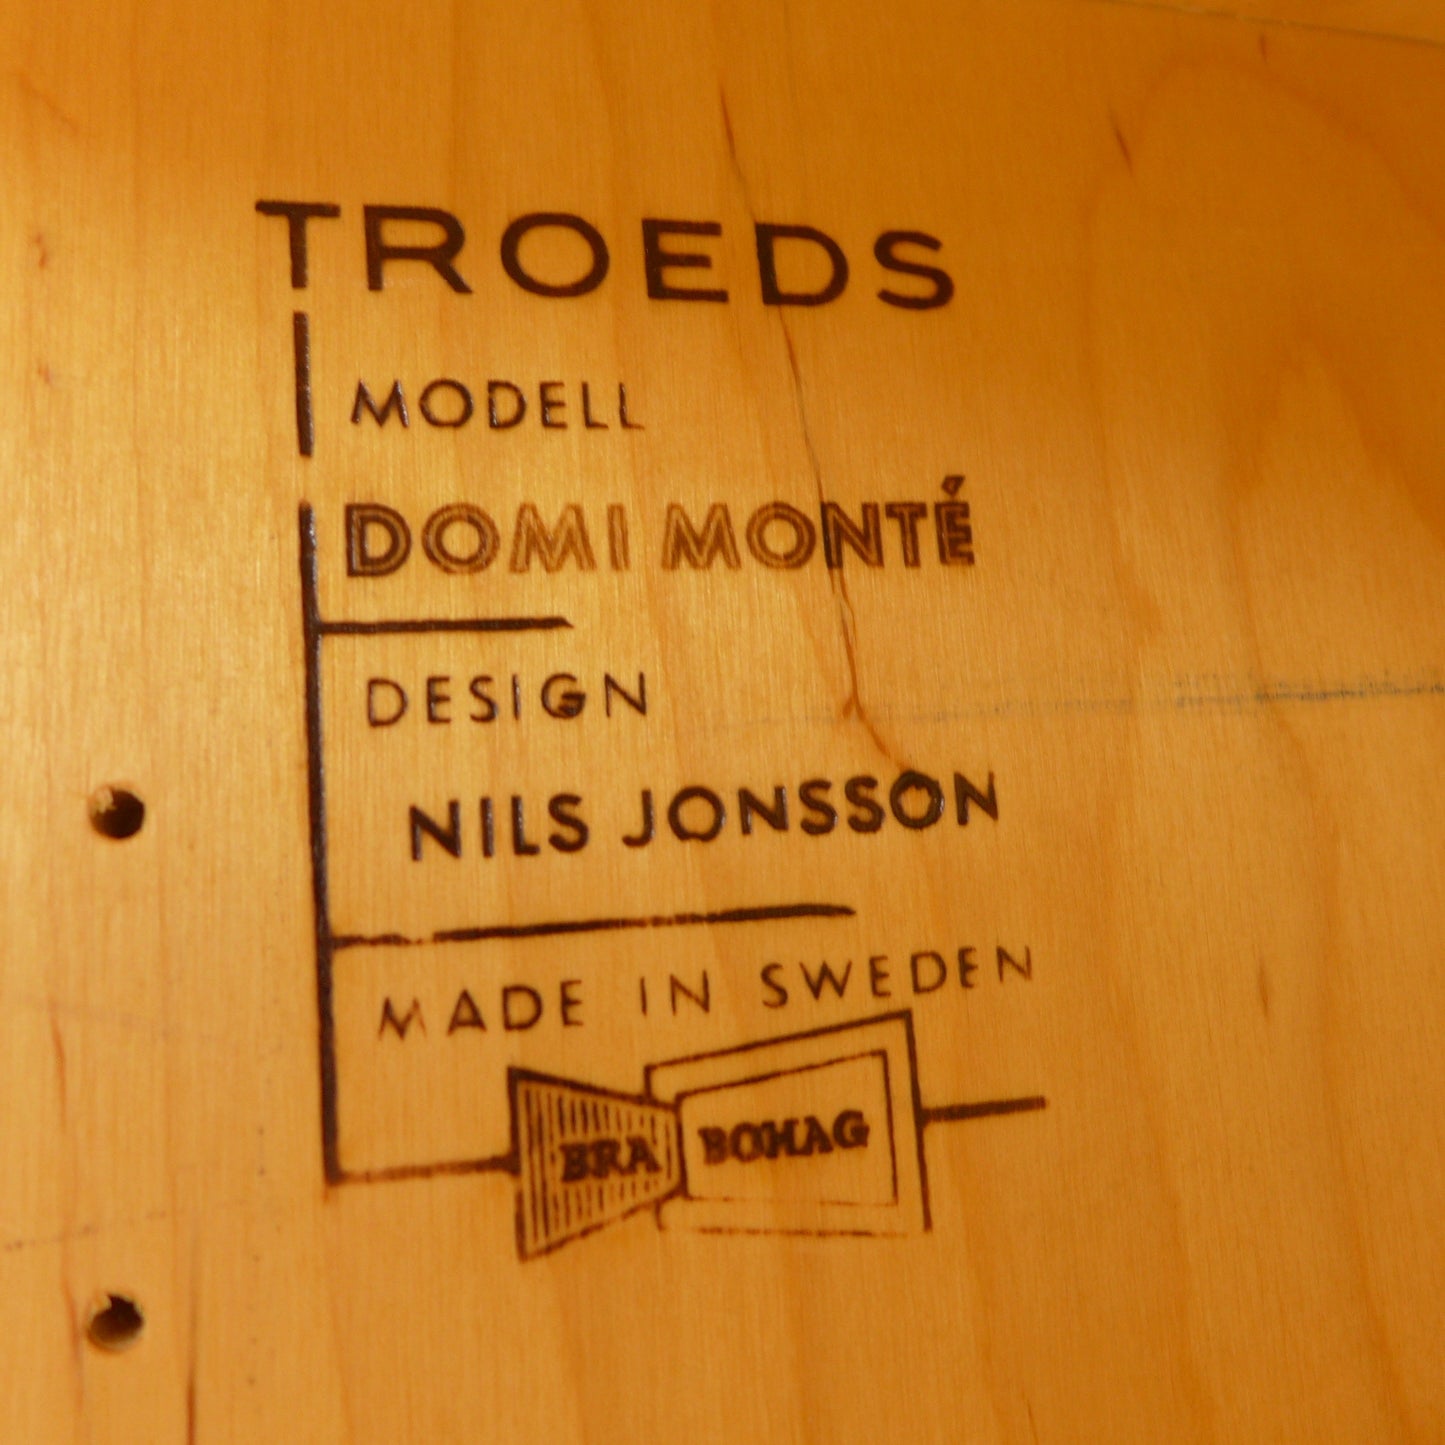 Nils Jonsson Teak Sideboard for Troeds Domi Monte